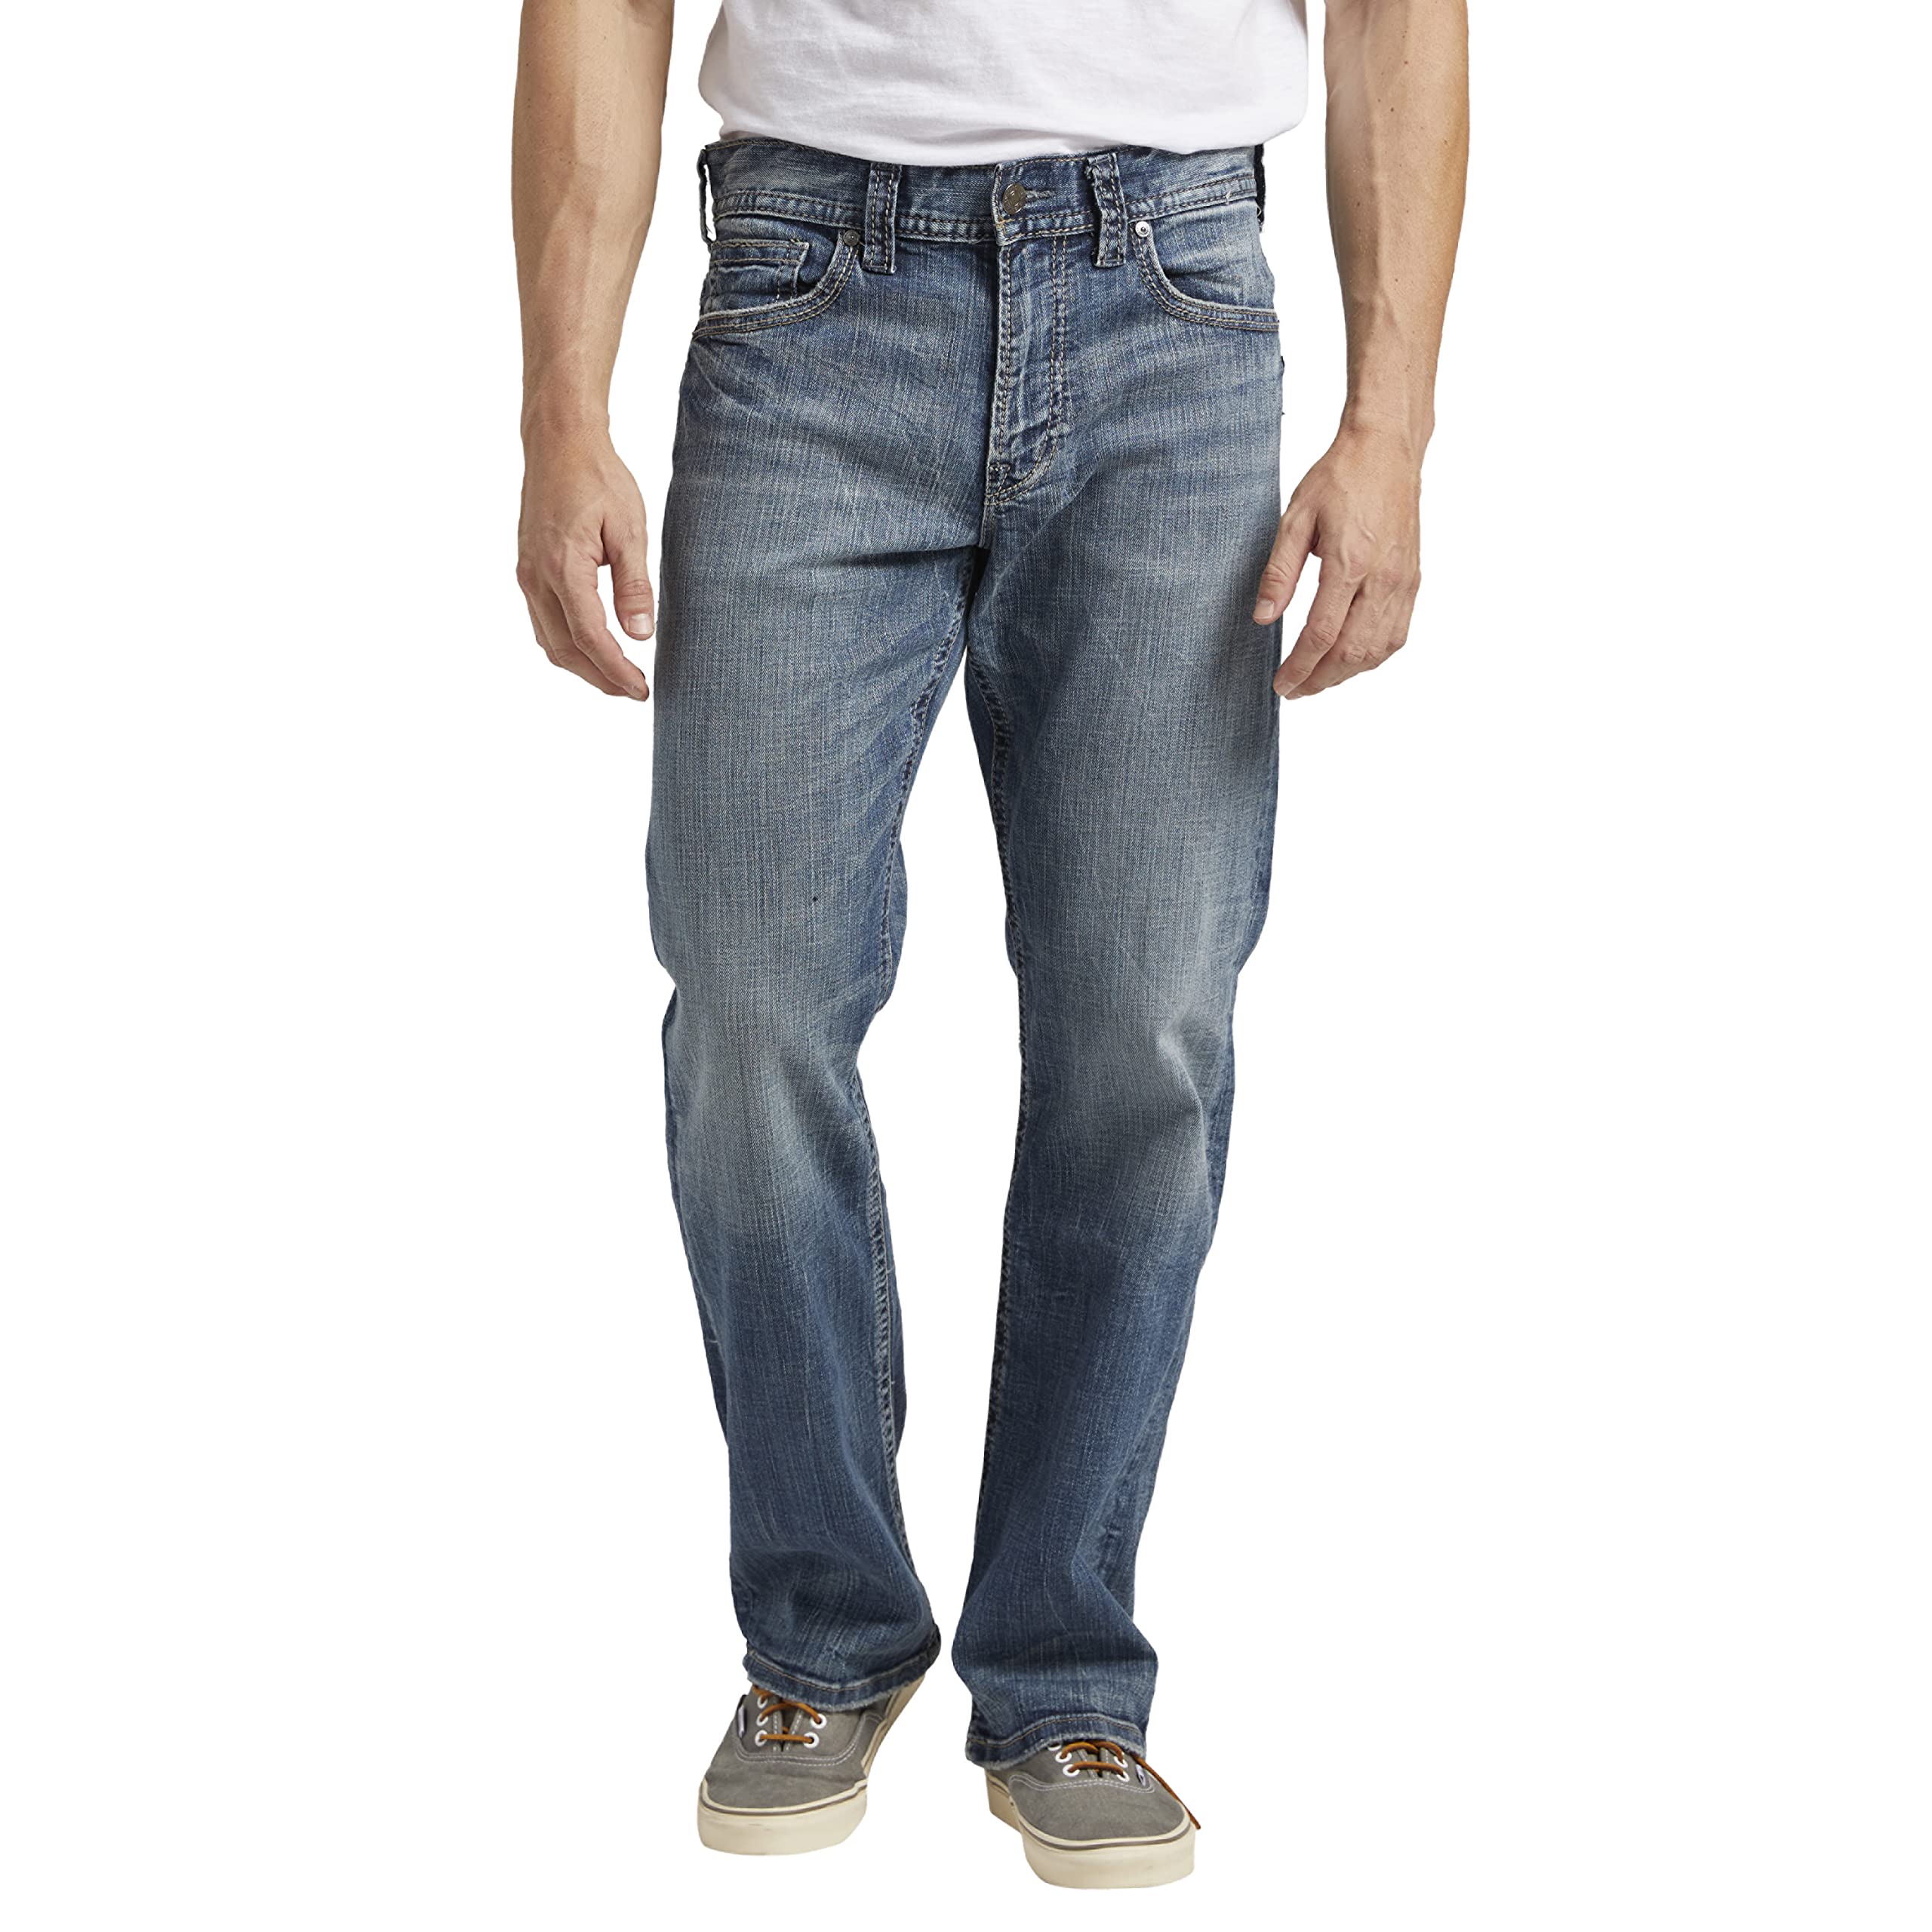 Silver Jeans co Mens gordie Loose Fit Straight Leg Jeans, Medium Vintage, 31W x 32L